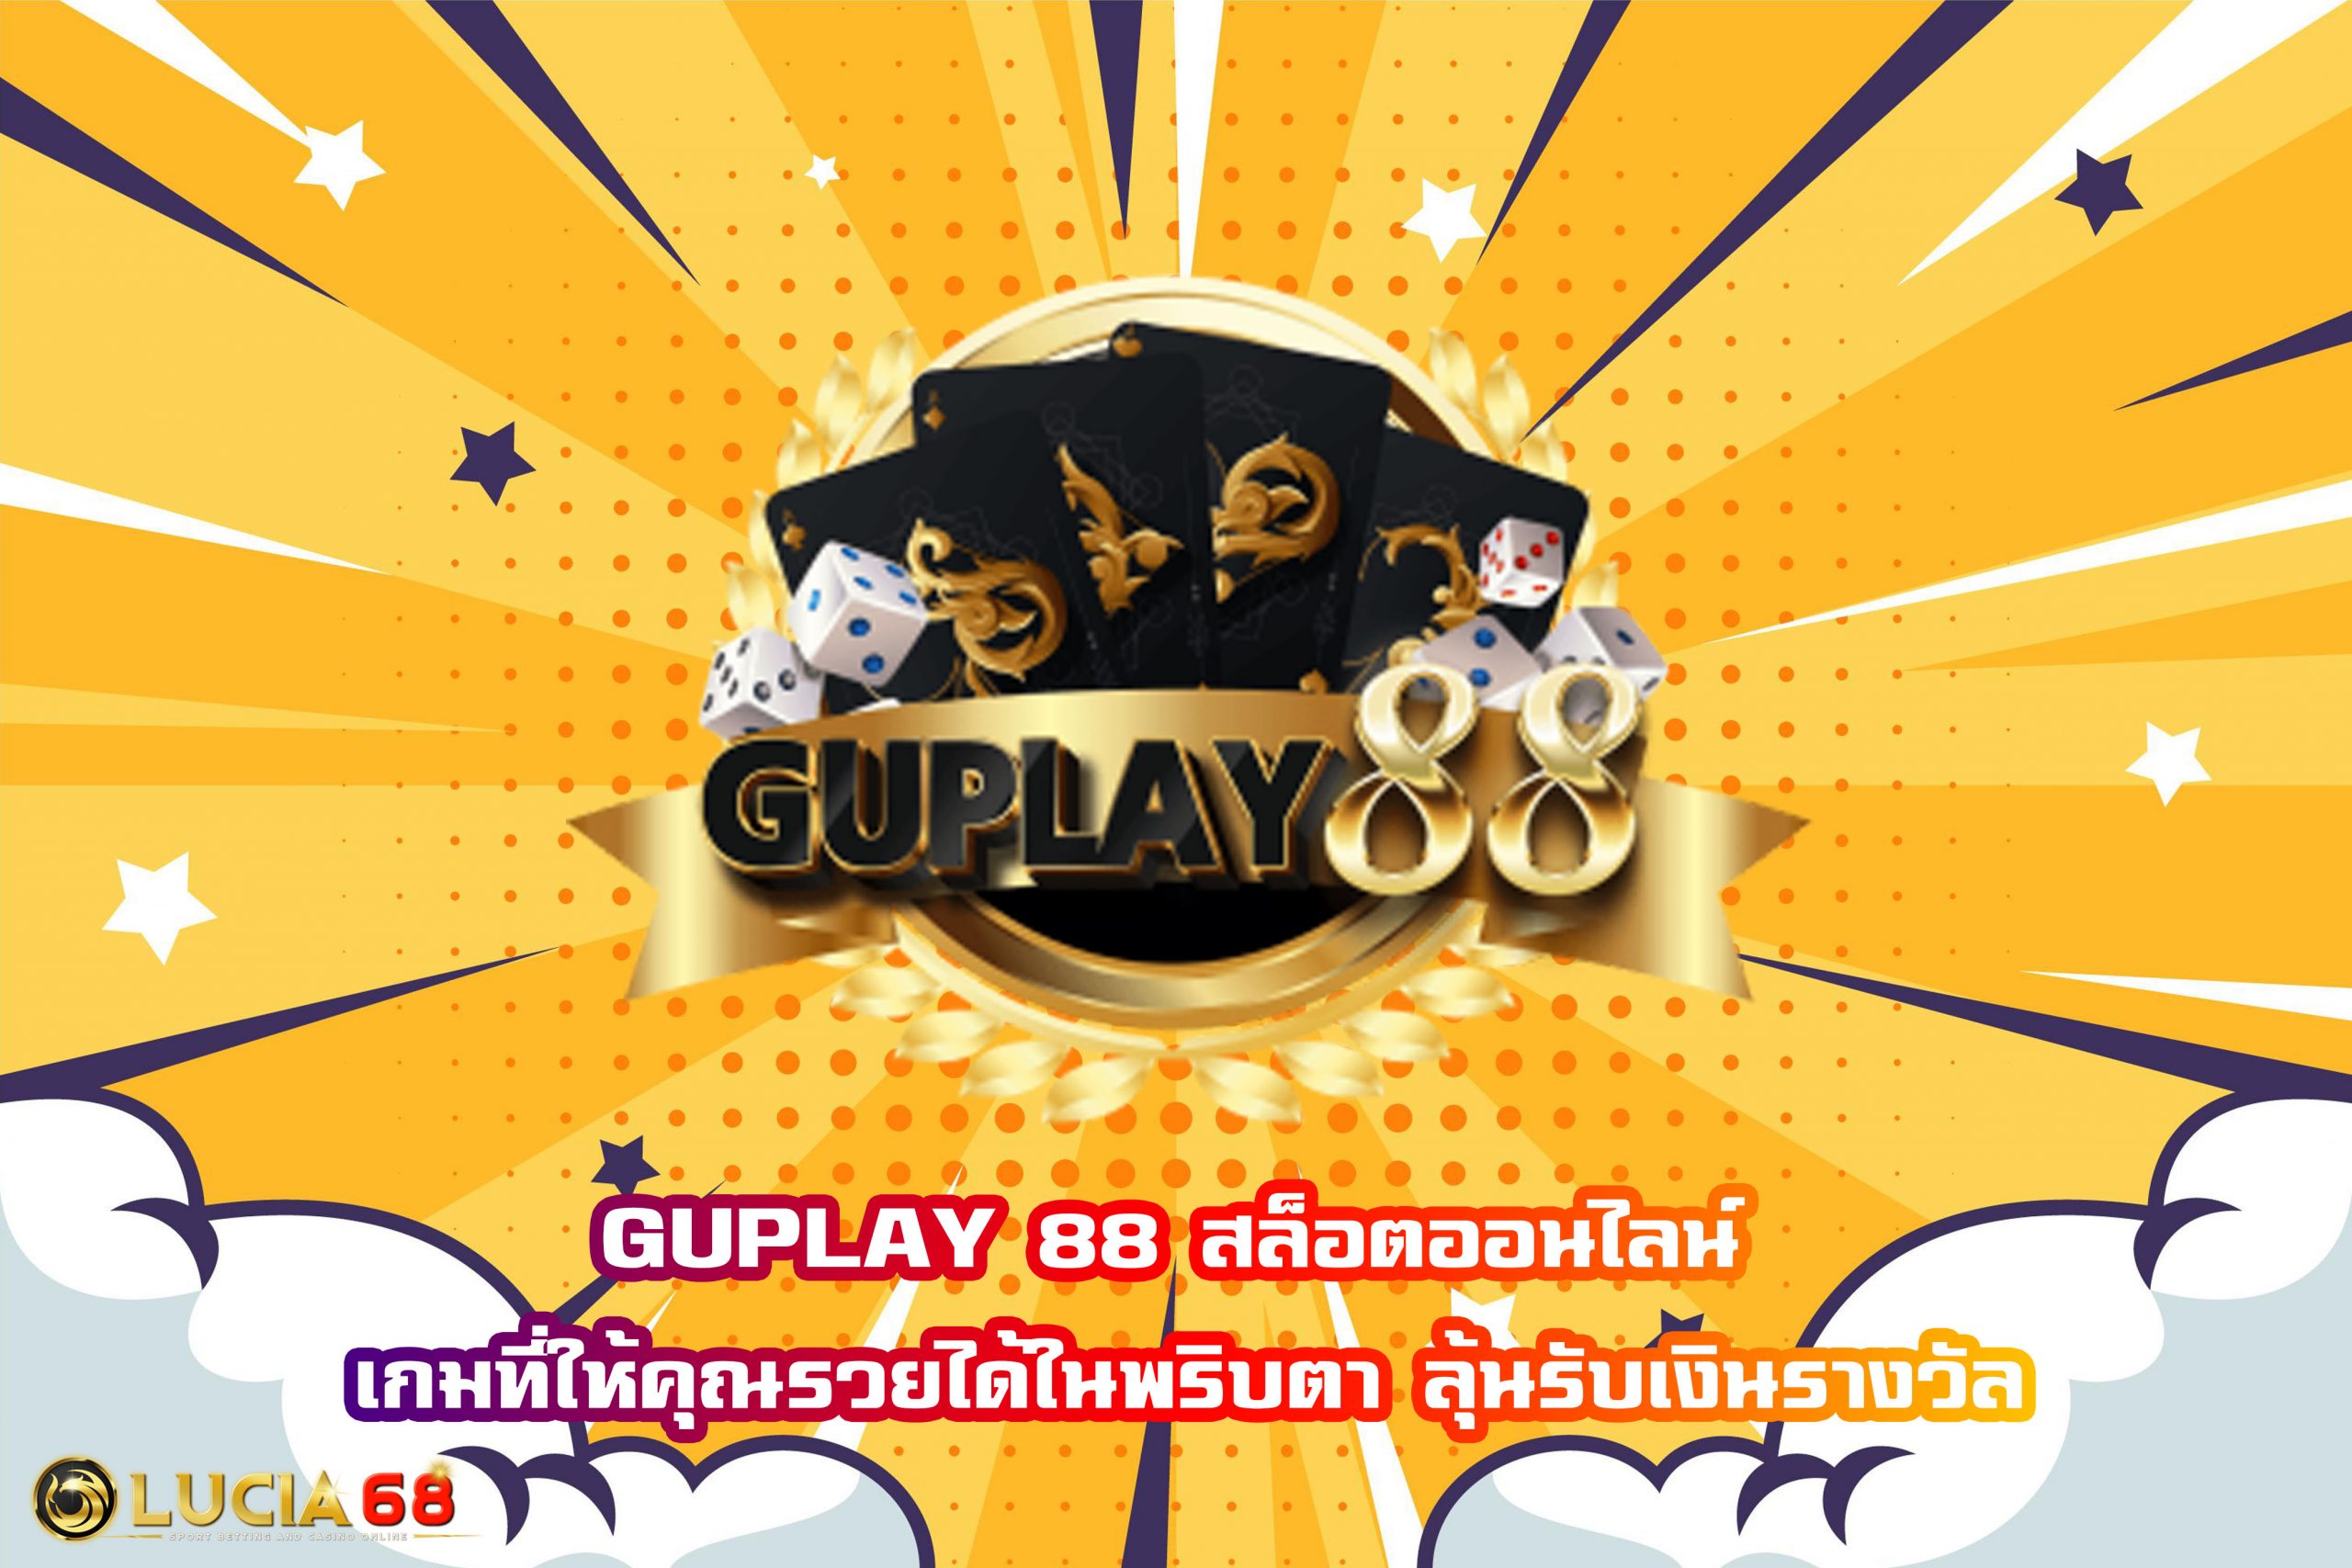 GUPLAY 88 สล็อตออนไลน์ เกมที่ให้คุณรวยได้ในพริบตา ลุ้นรับเงินรางวัล